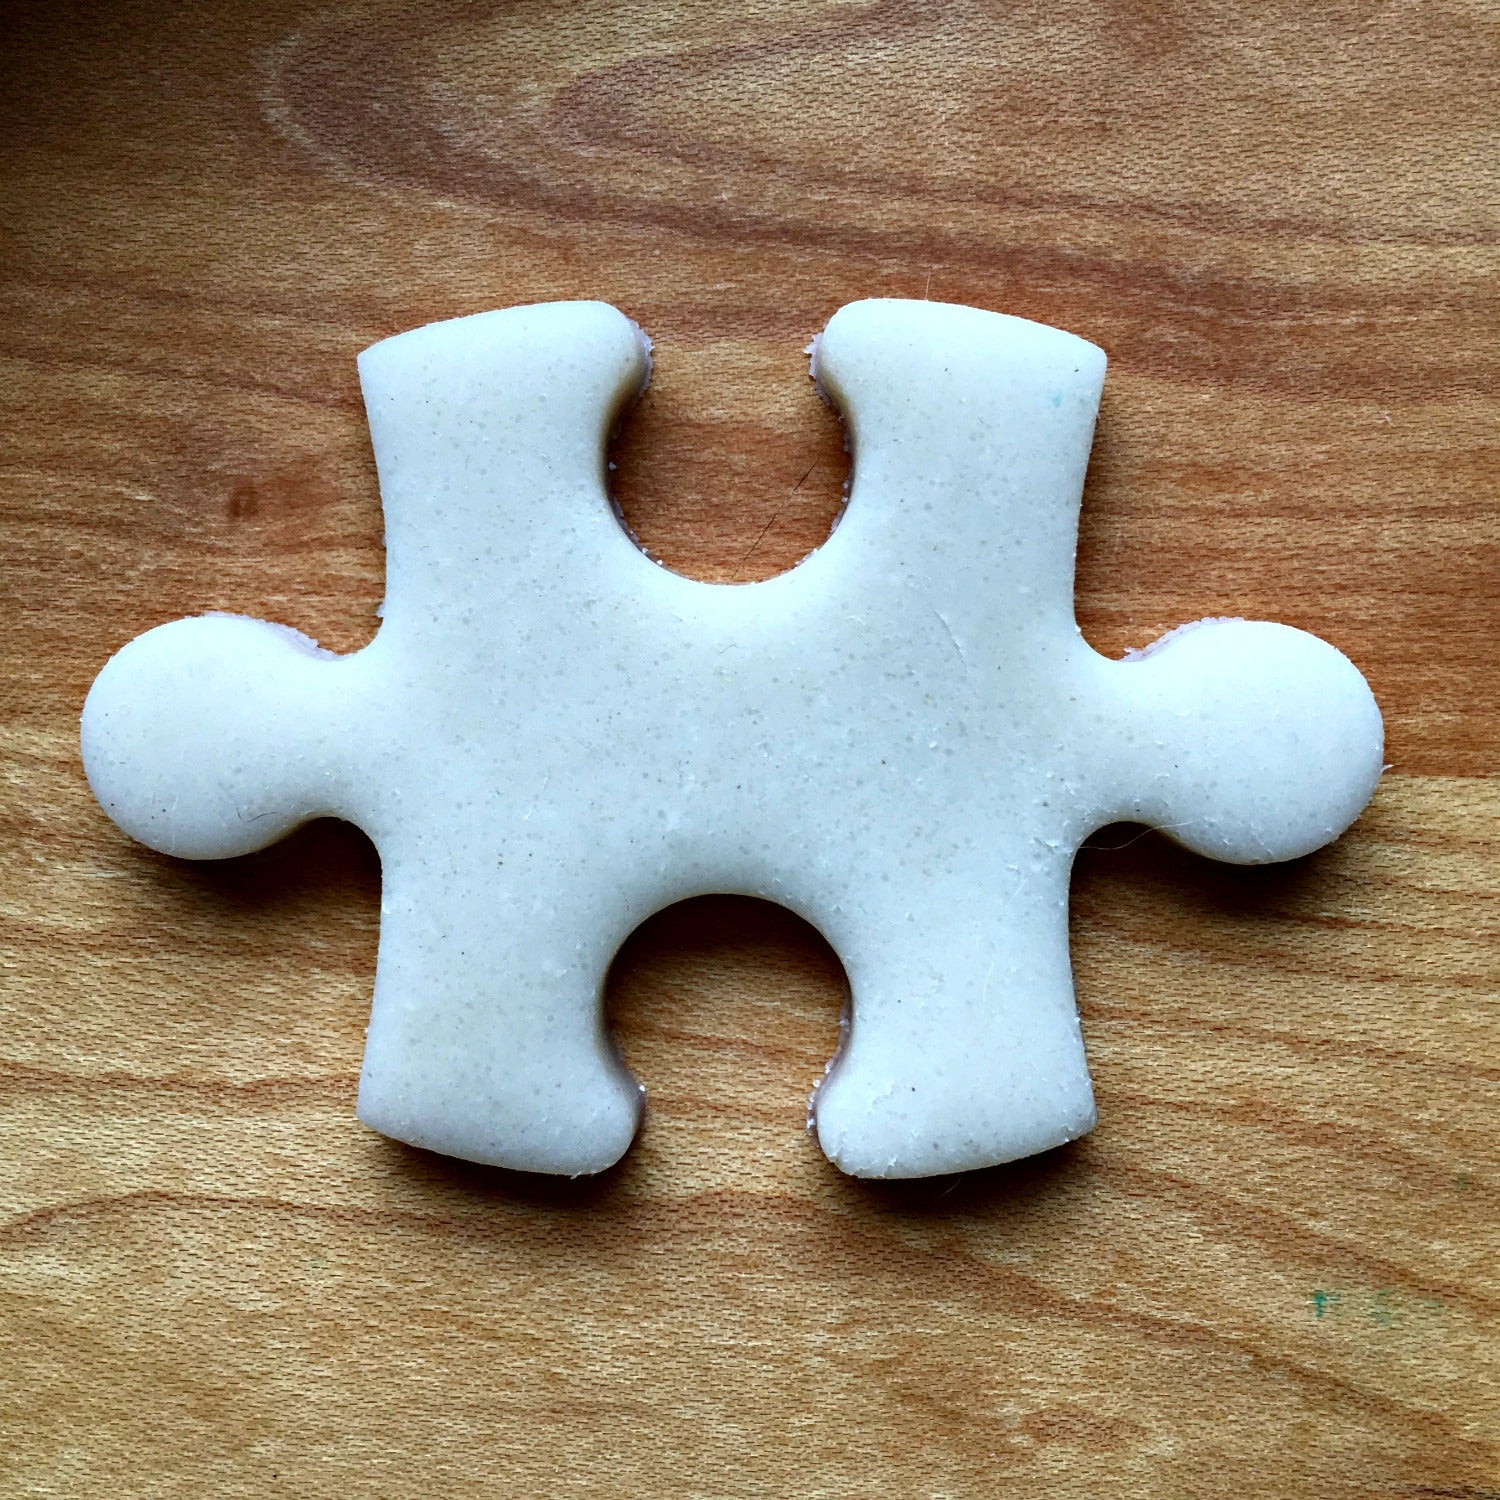 Puzzle Piece 101 Cookie Cutter